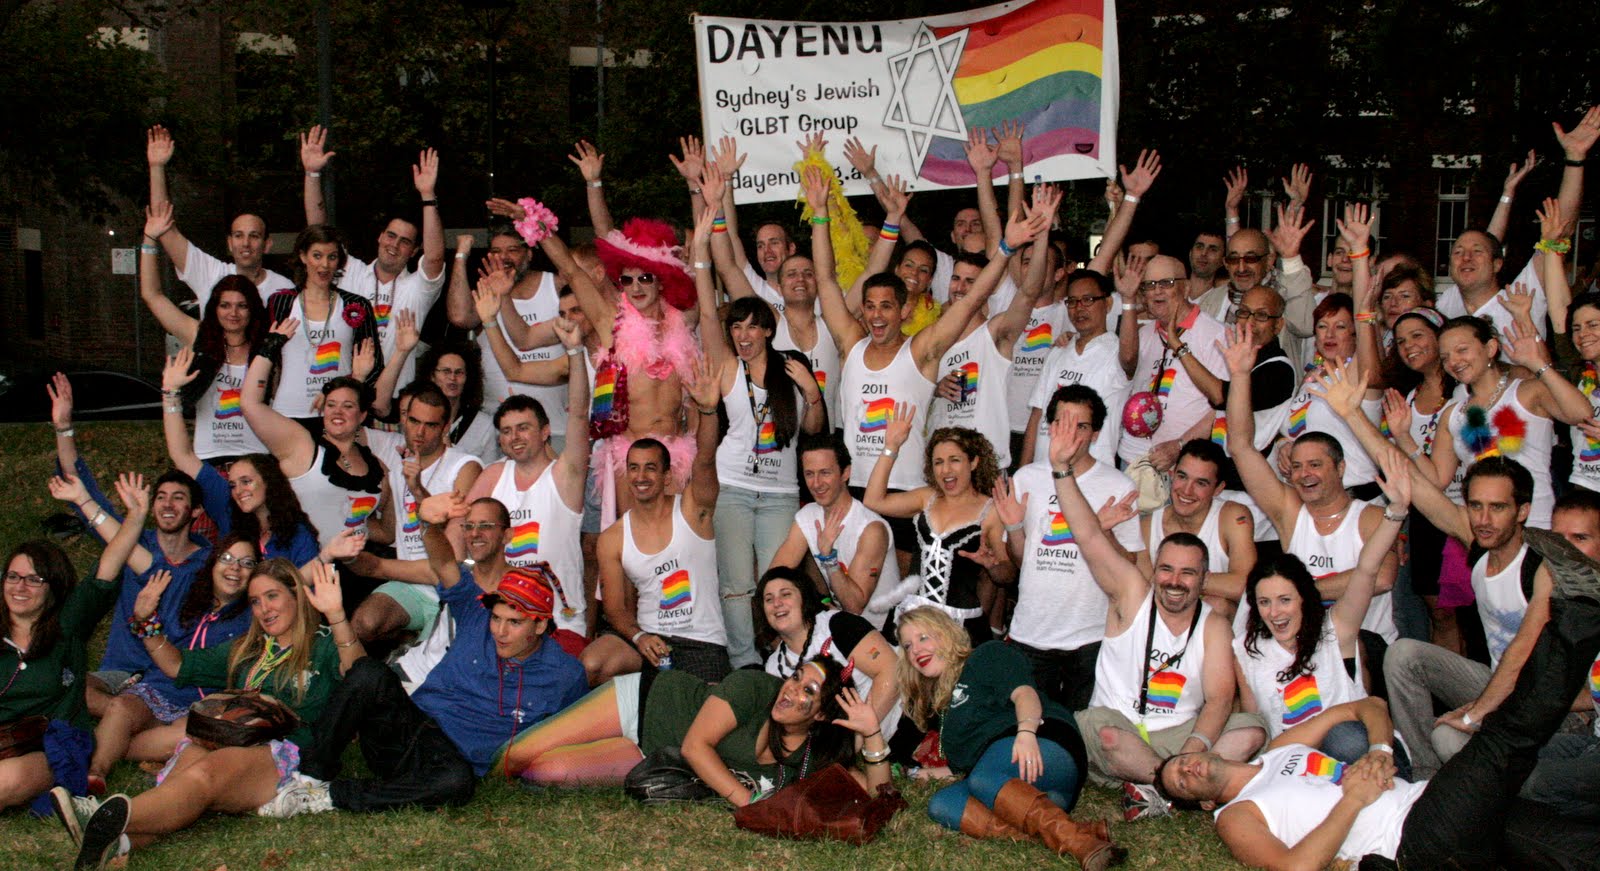 Gay Jewish group Dayenu to celebrate 15th anniversary this Mardi Gras